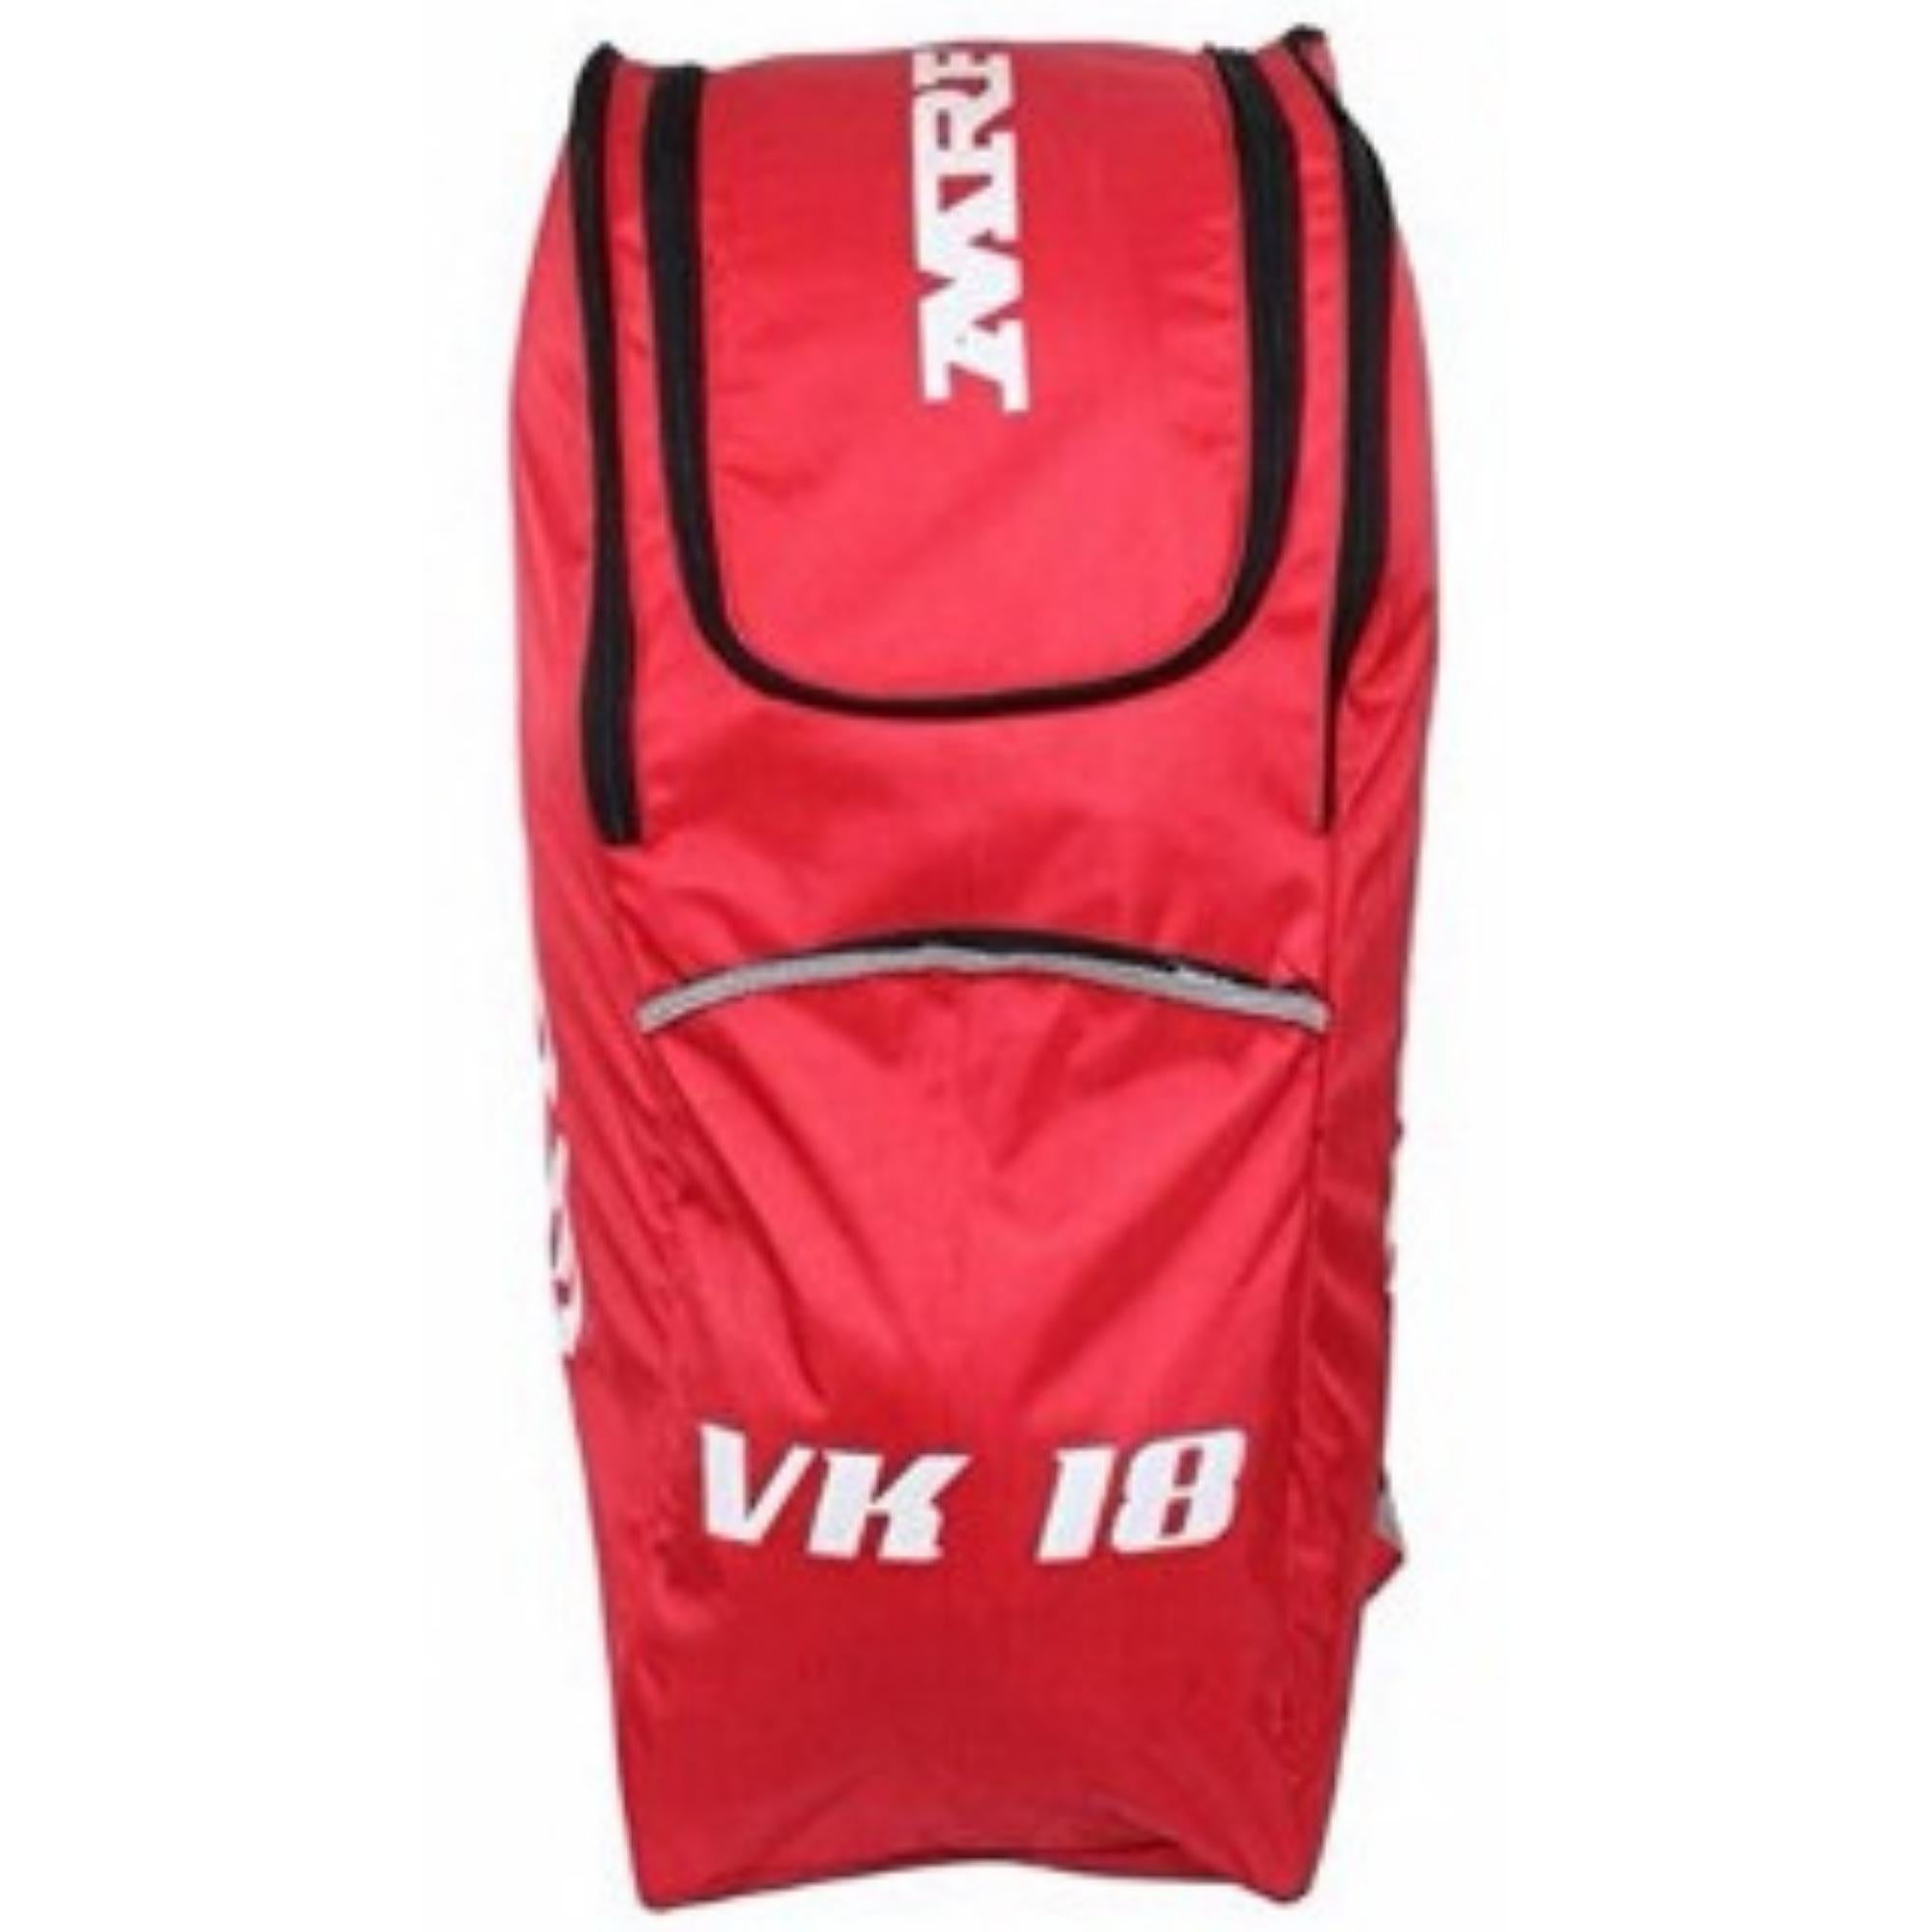 MRF Genius Grand Virat Kohli 18 BACKPACK Cricket Kit Bag